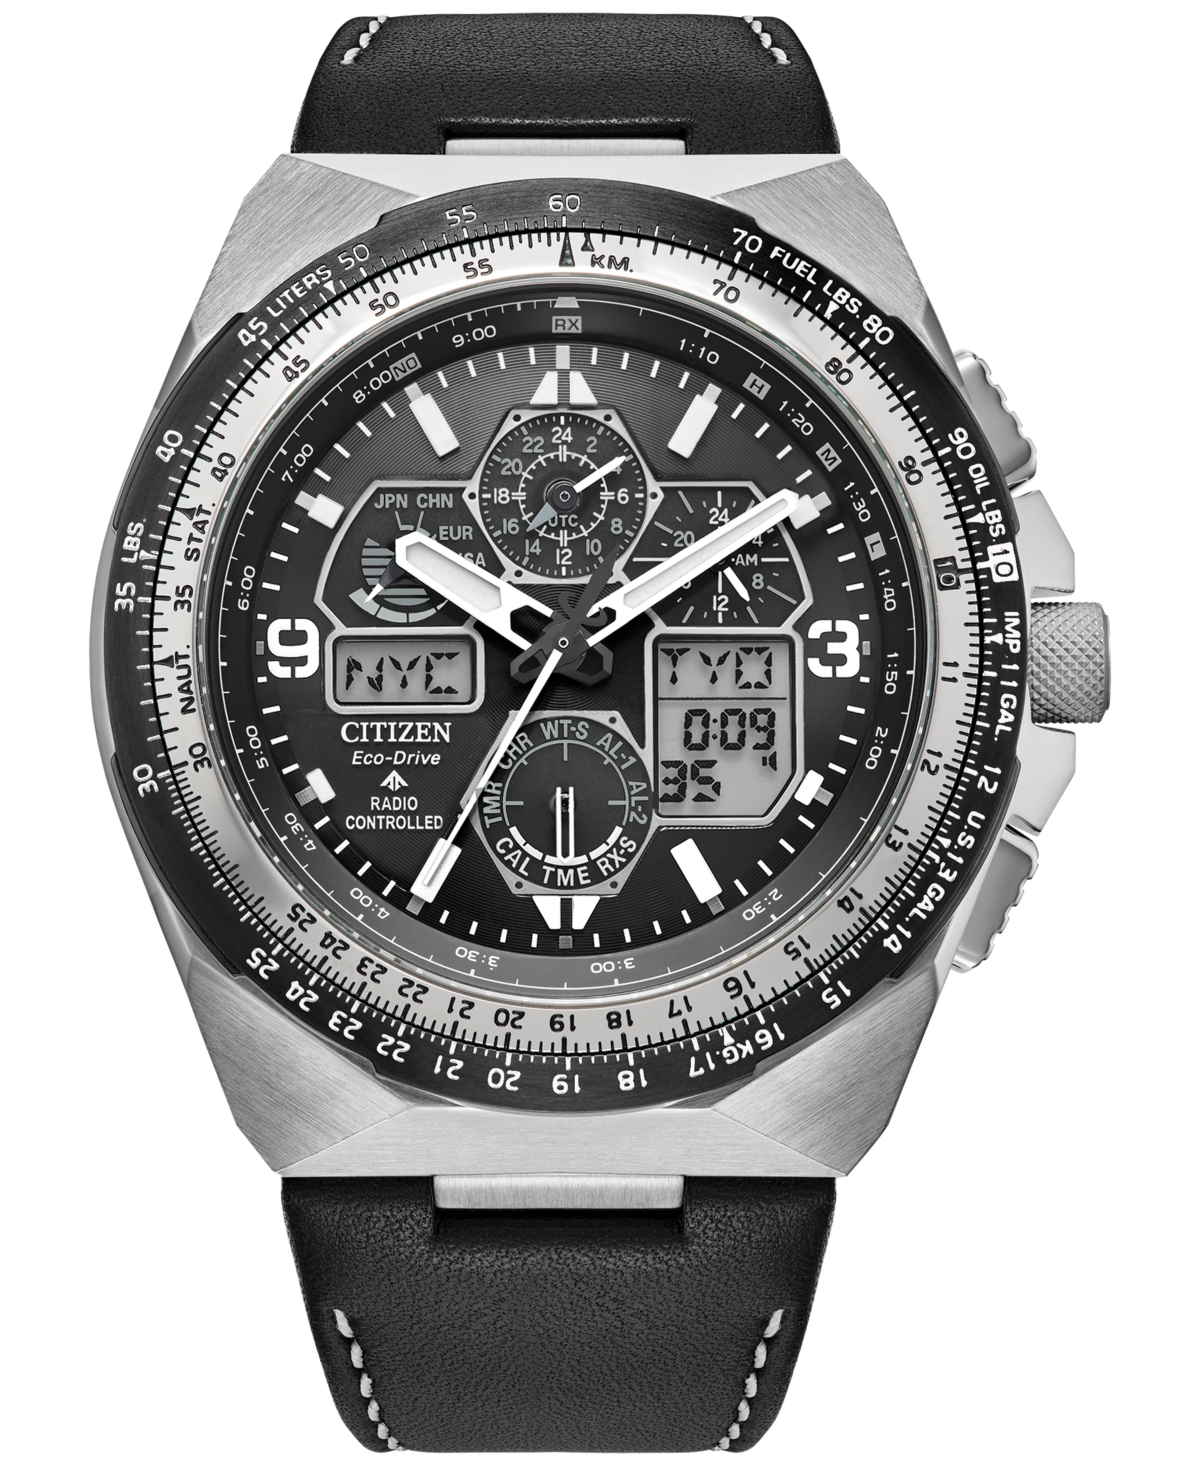 Citizen Eco-drive Men's Chronograph Promaster Skyhawk Black Leather Strap Watch 46mm